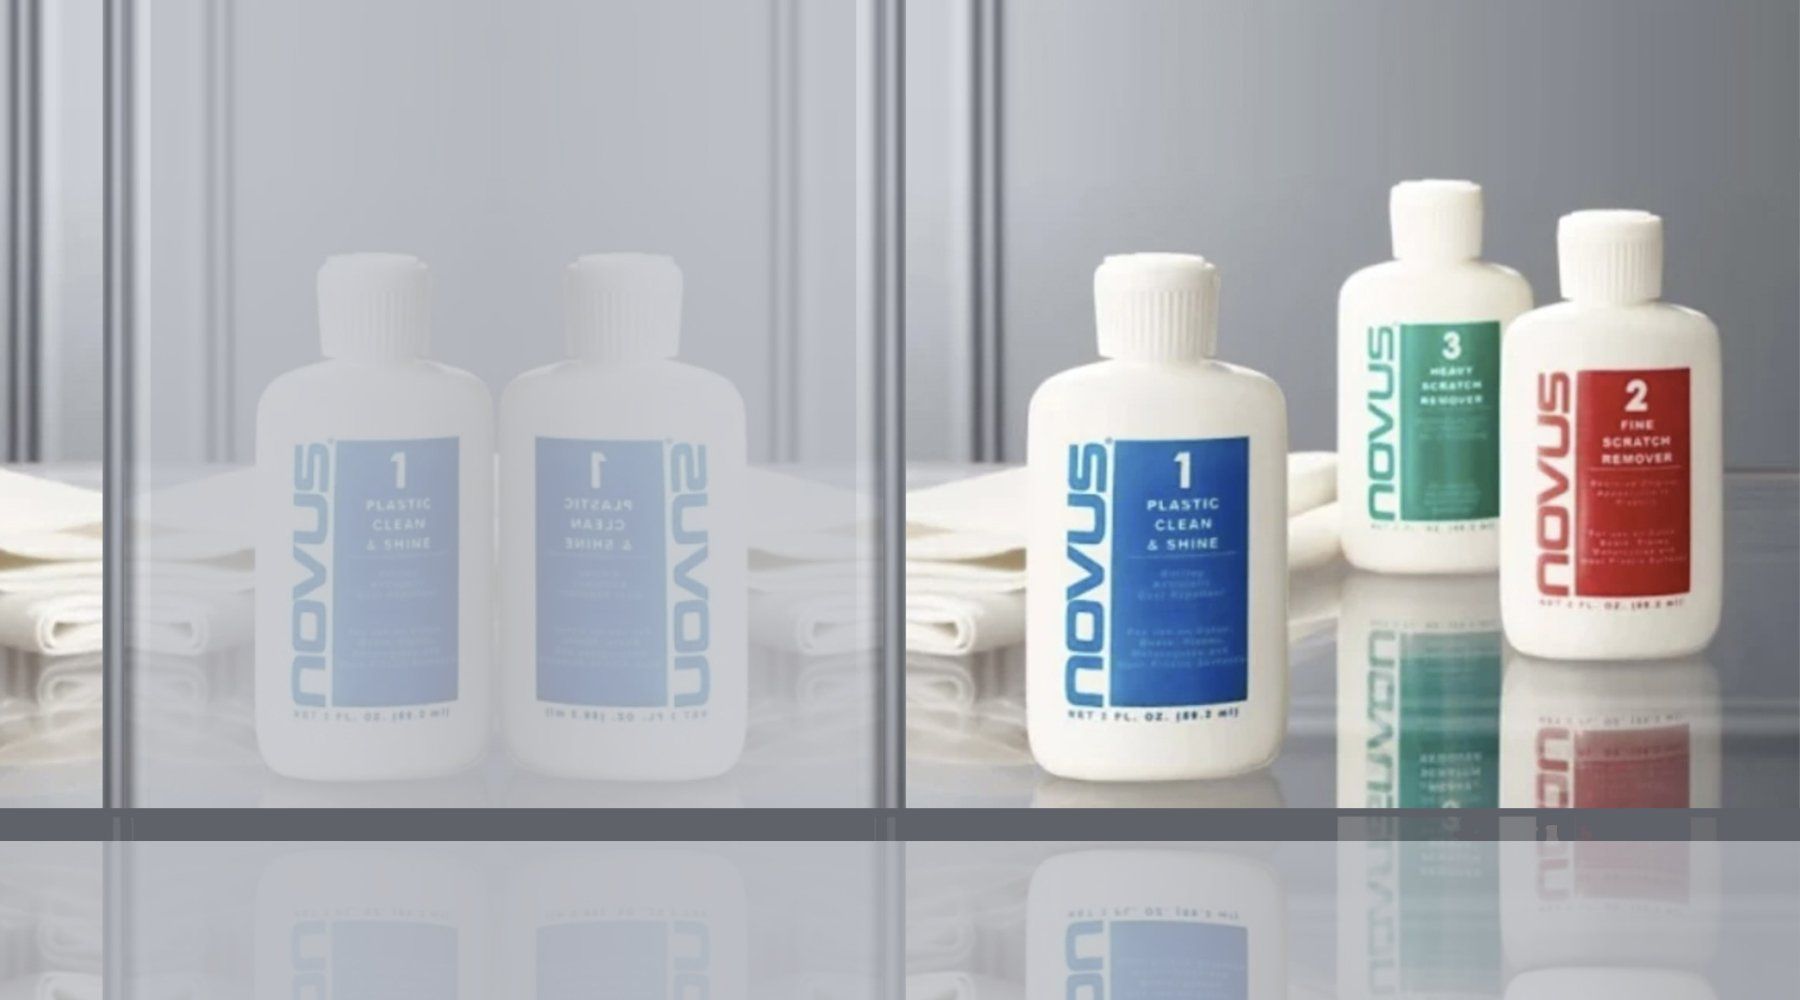 Novus Polish Products | NEAT BEAUTY® LTD